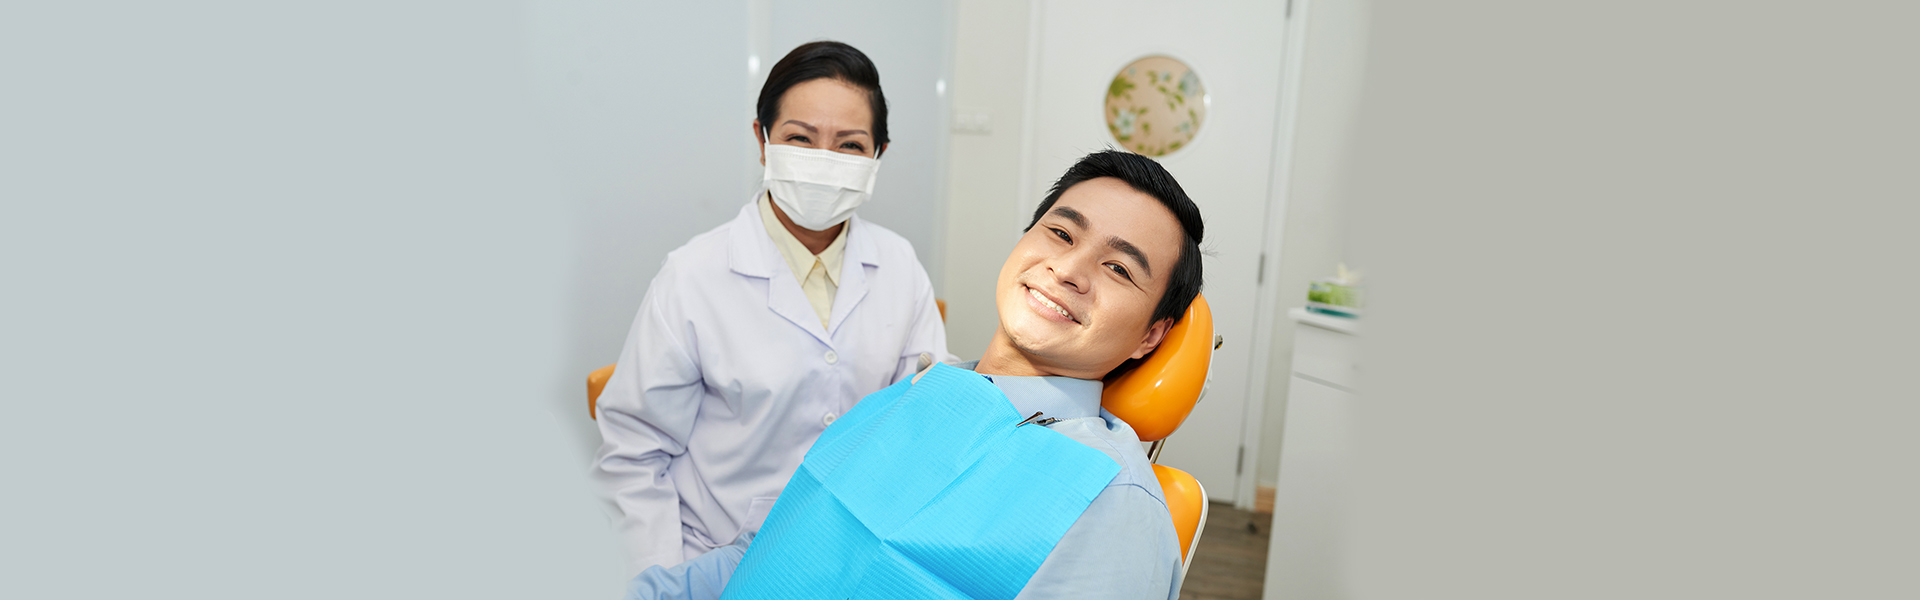 Wisdom Teeth Extraction: Purpose, Procedure, Recovery